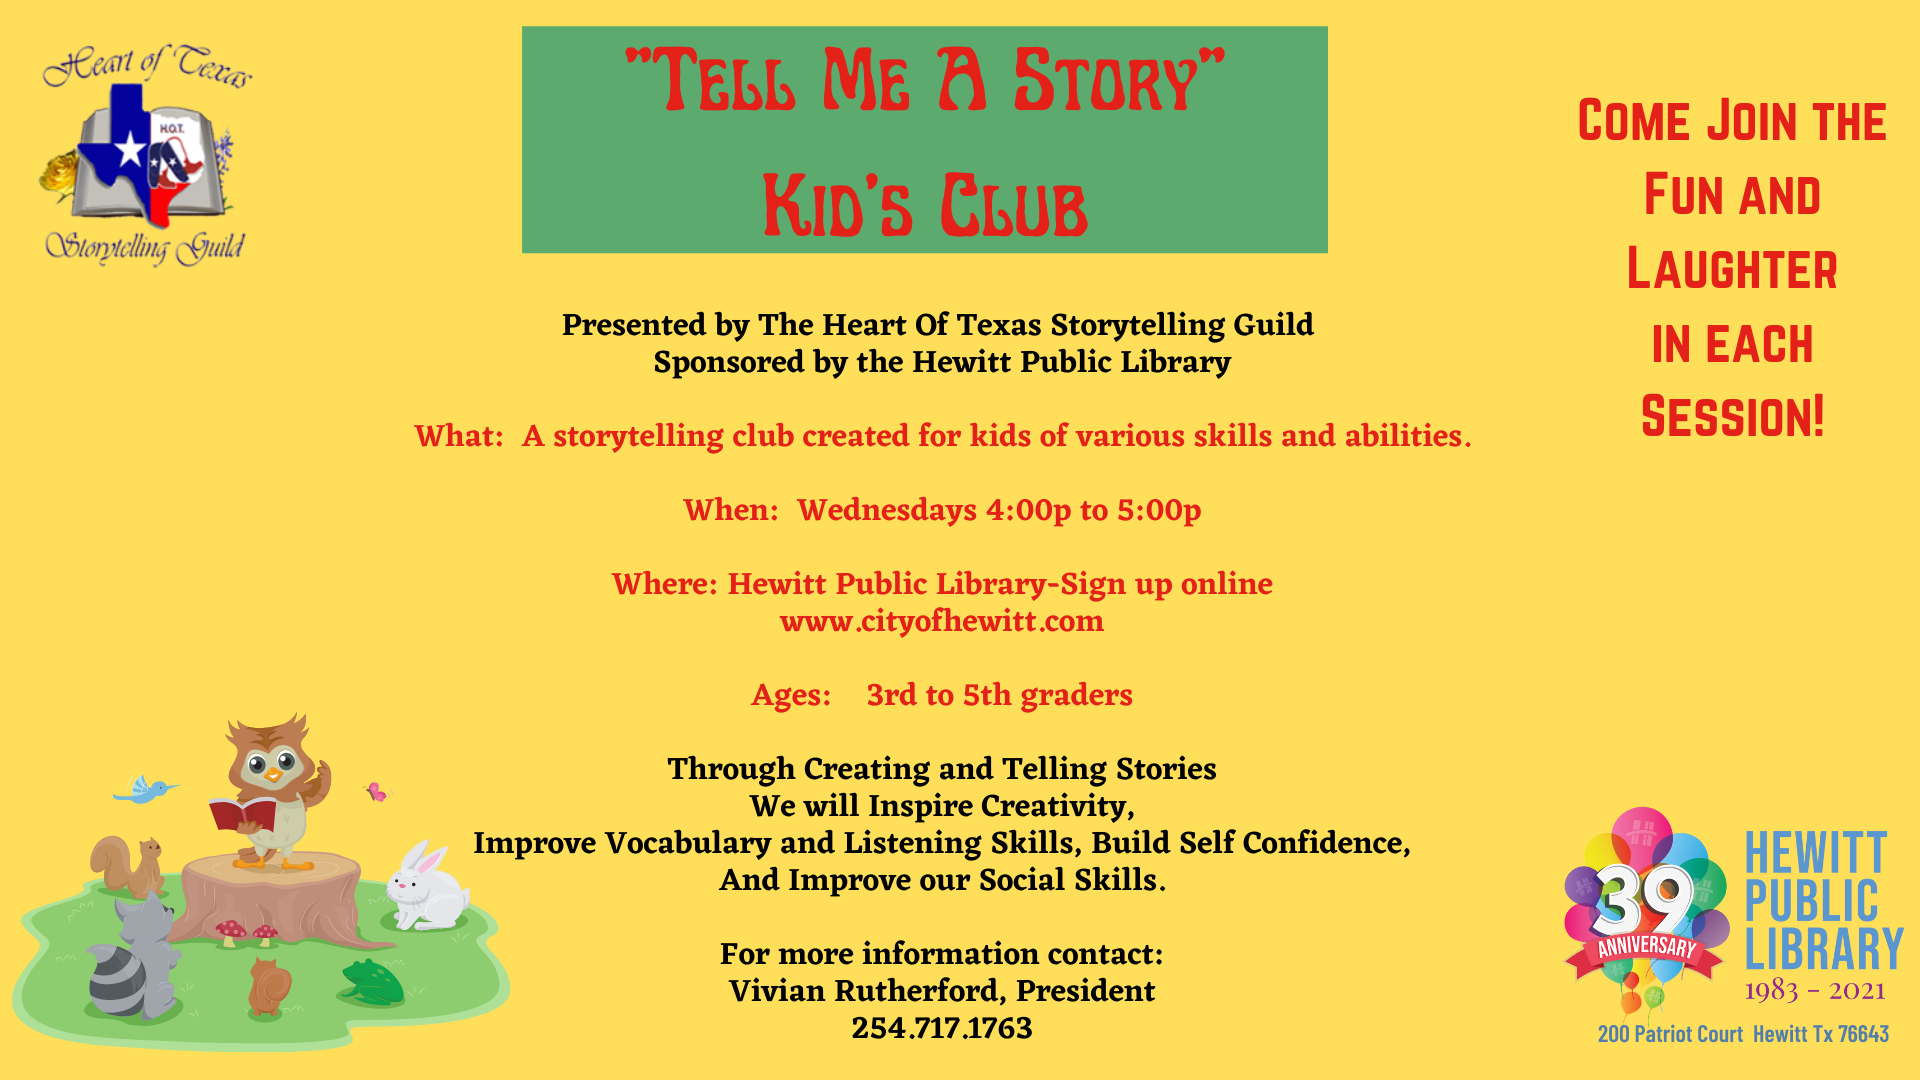 Tell Me a Story Kid's Club